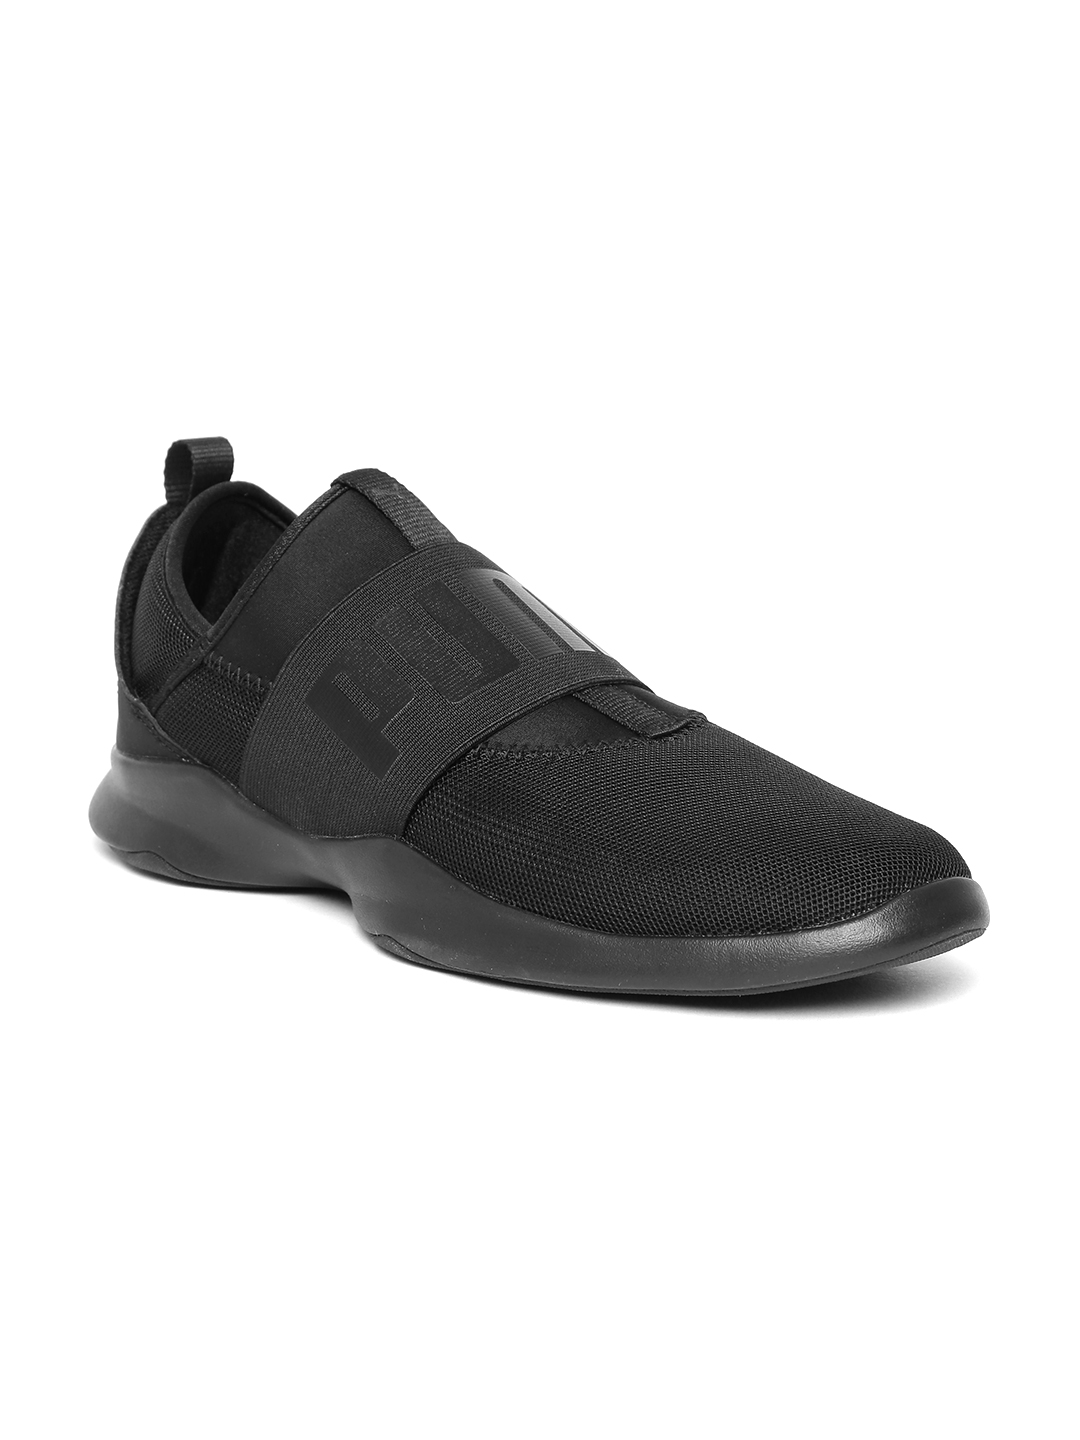 Puma Dare Unisex Black Slip-On Sneakers 